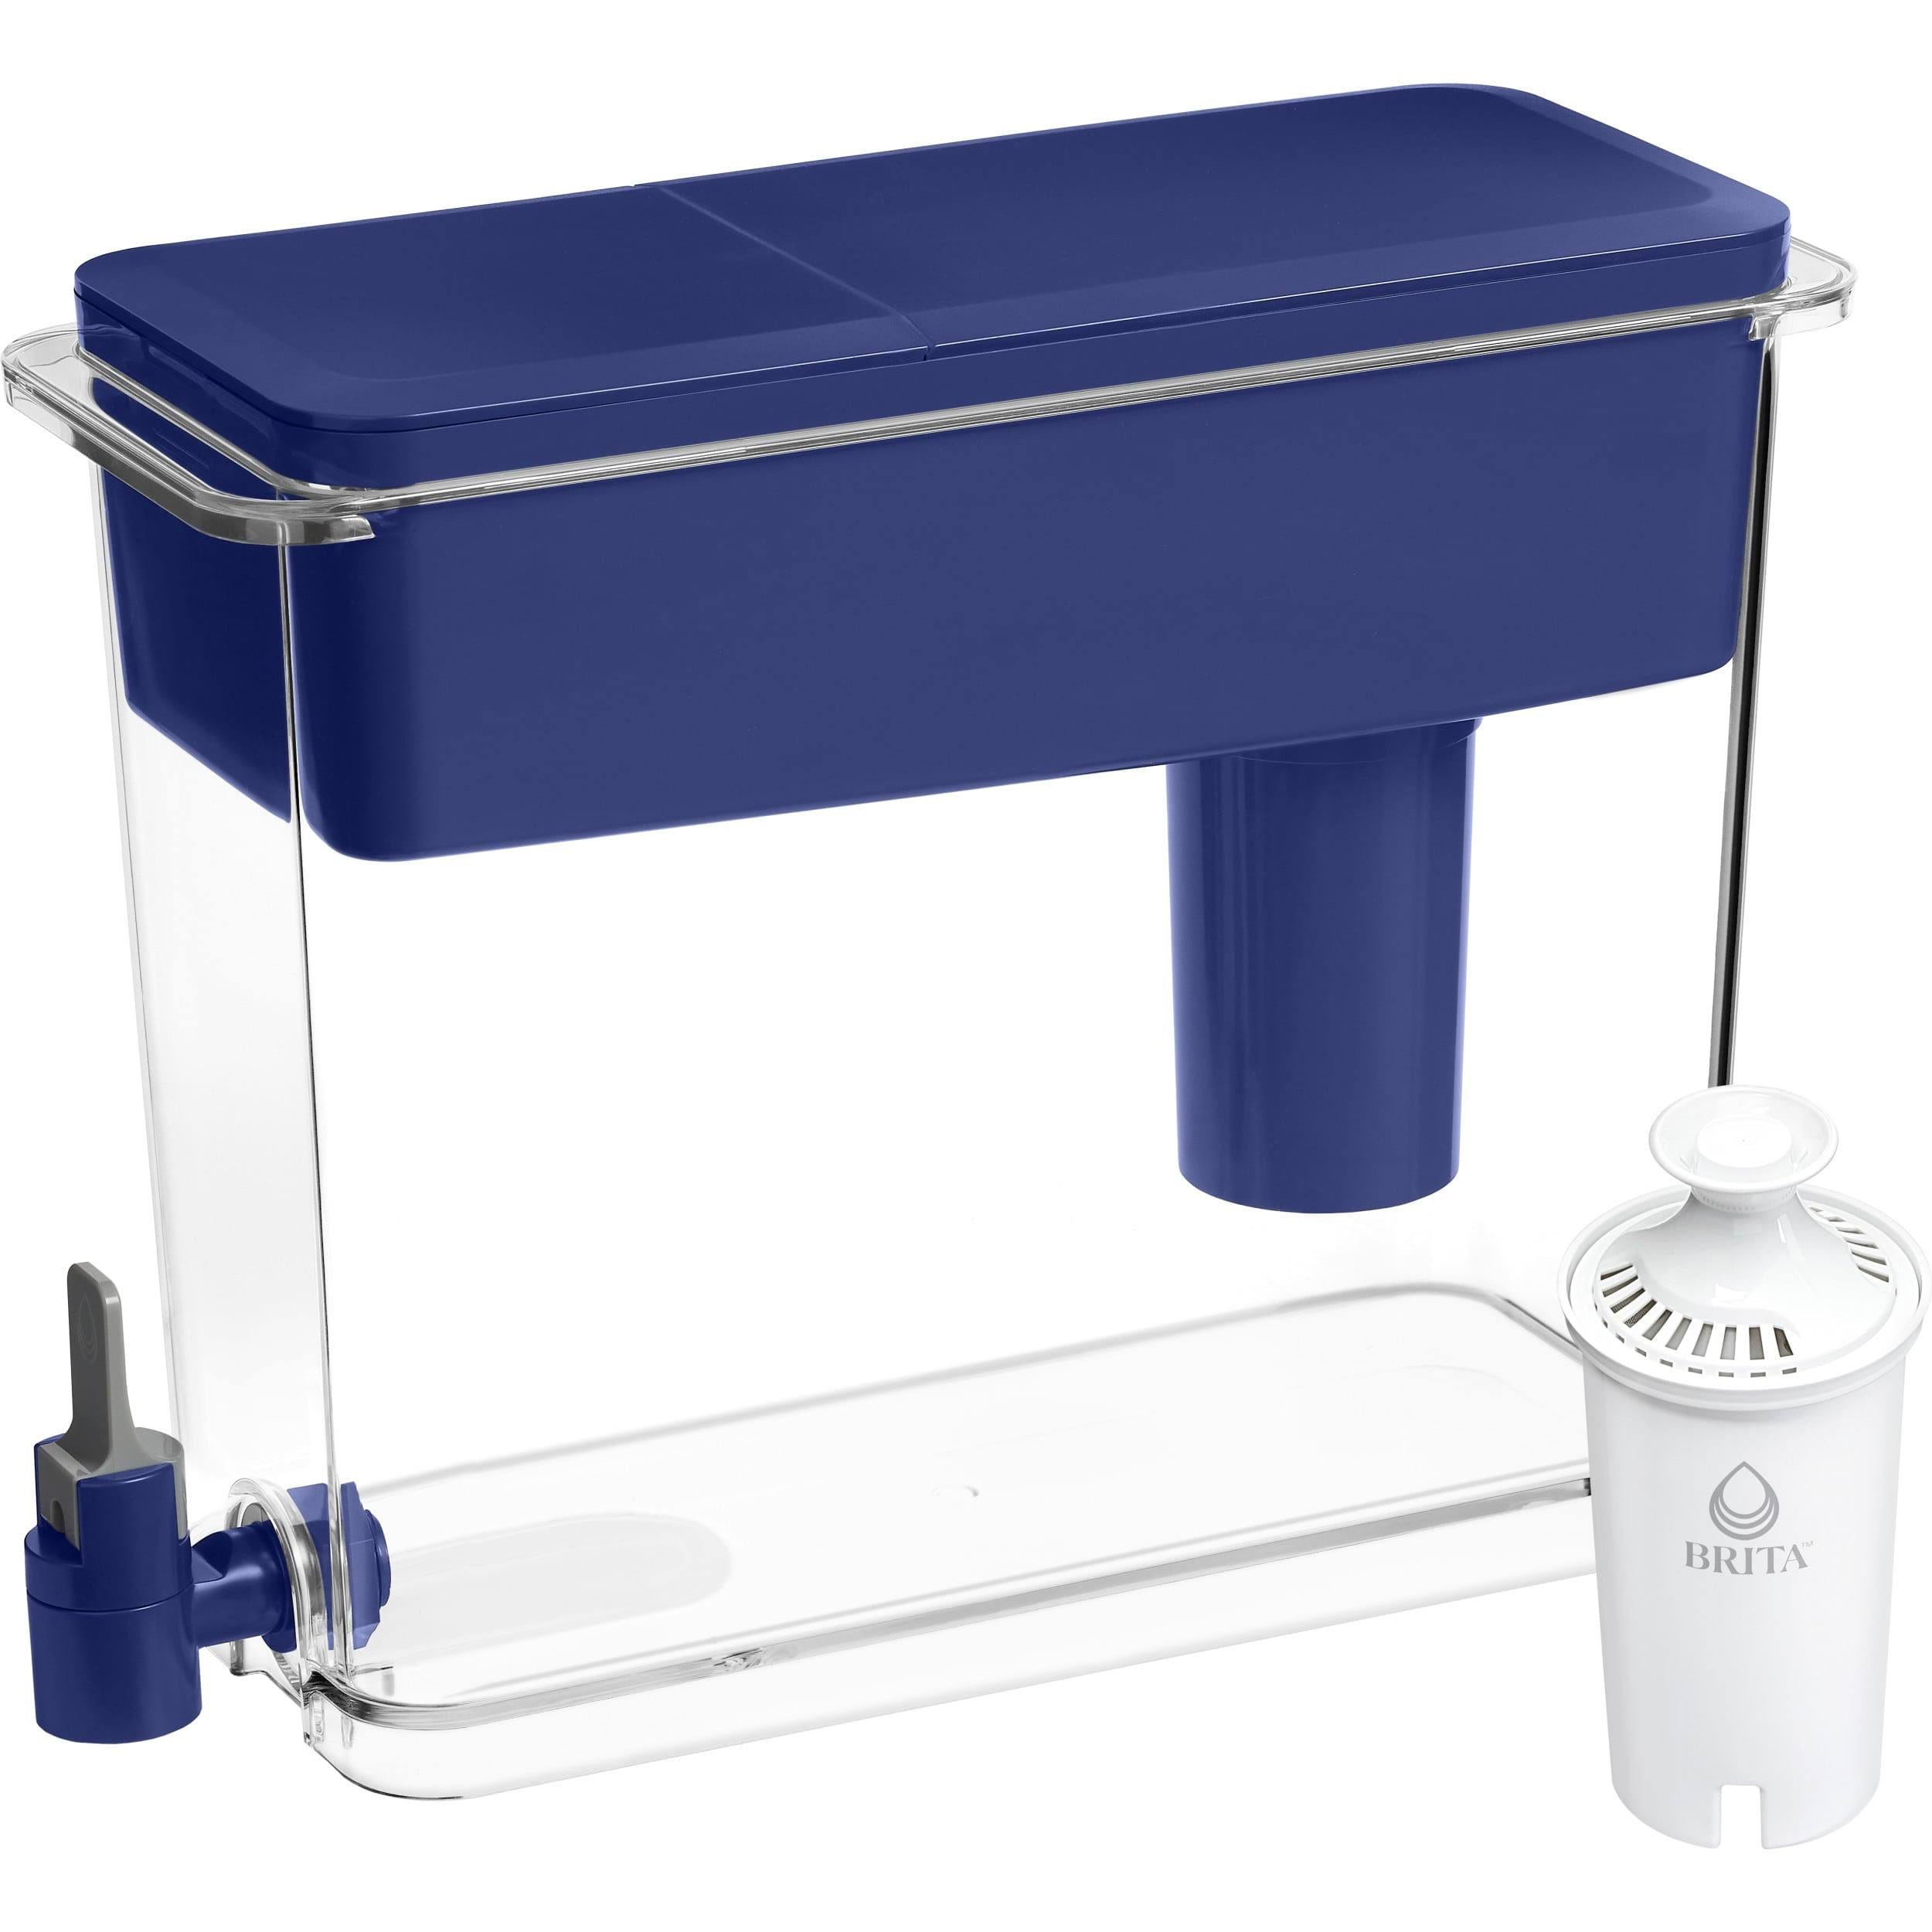 Brita UltraMax 27-Cup Blue Water Filter Dispenser | Image